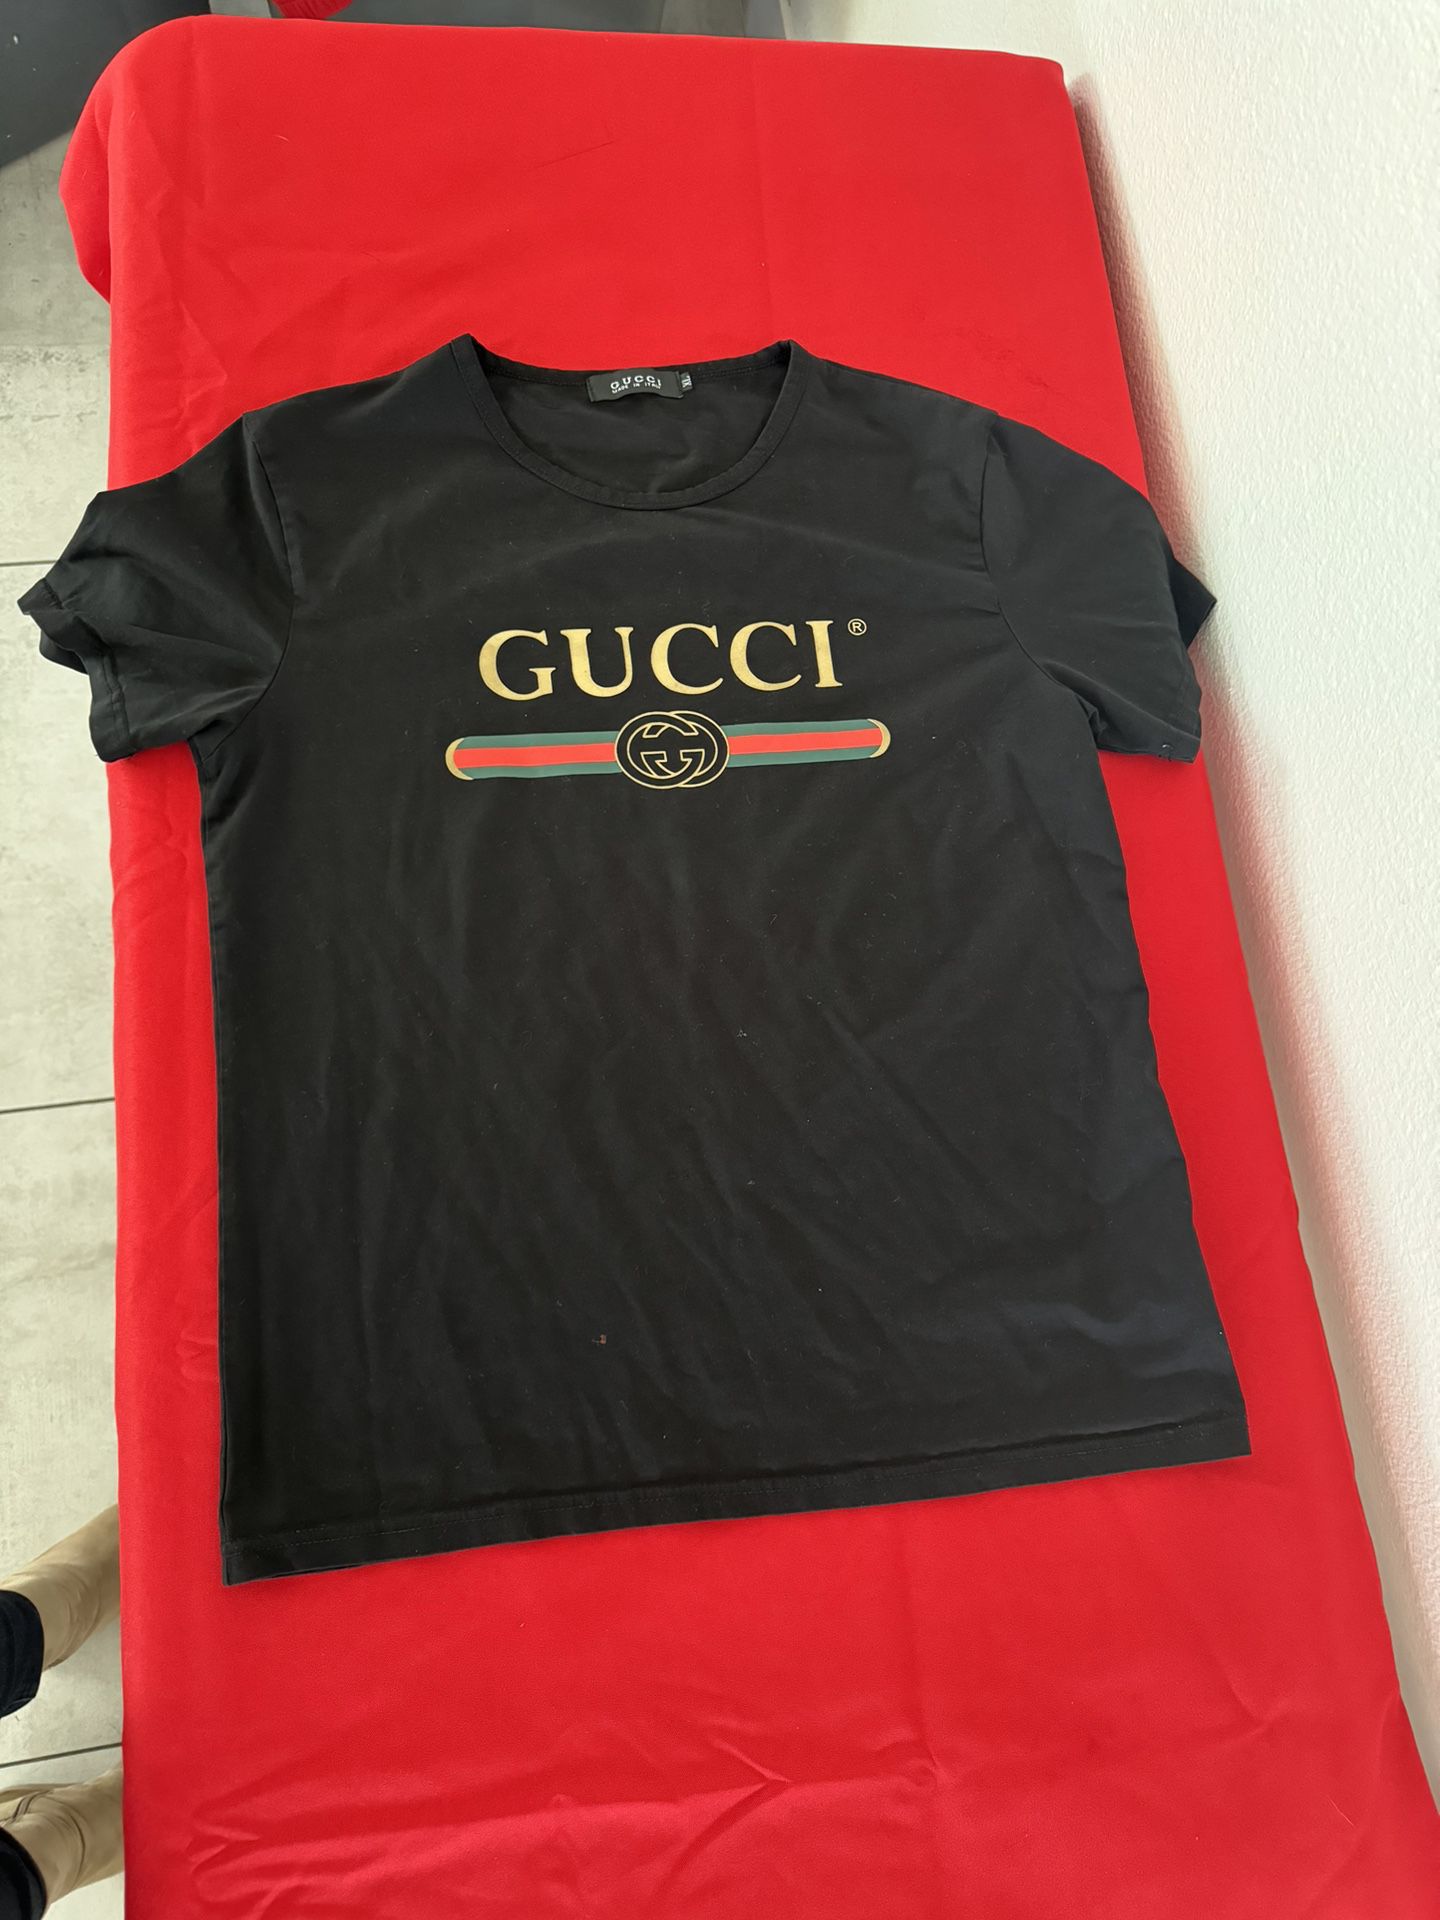 Gucci Size XL Shirt